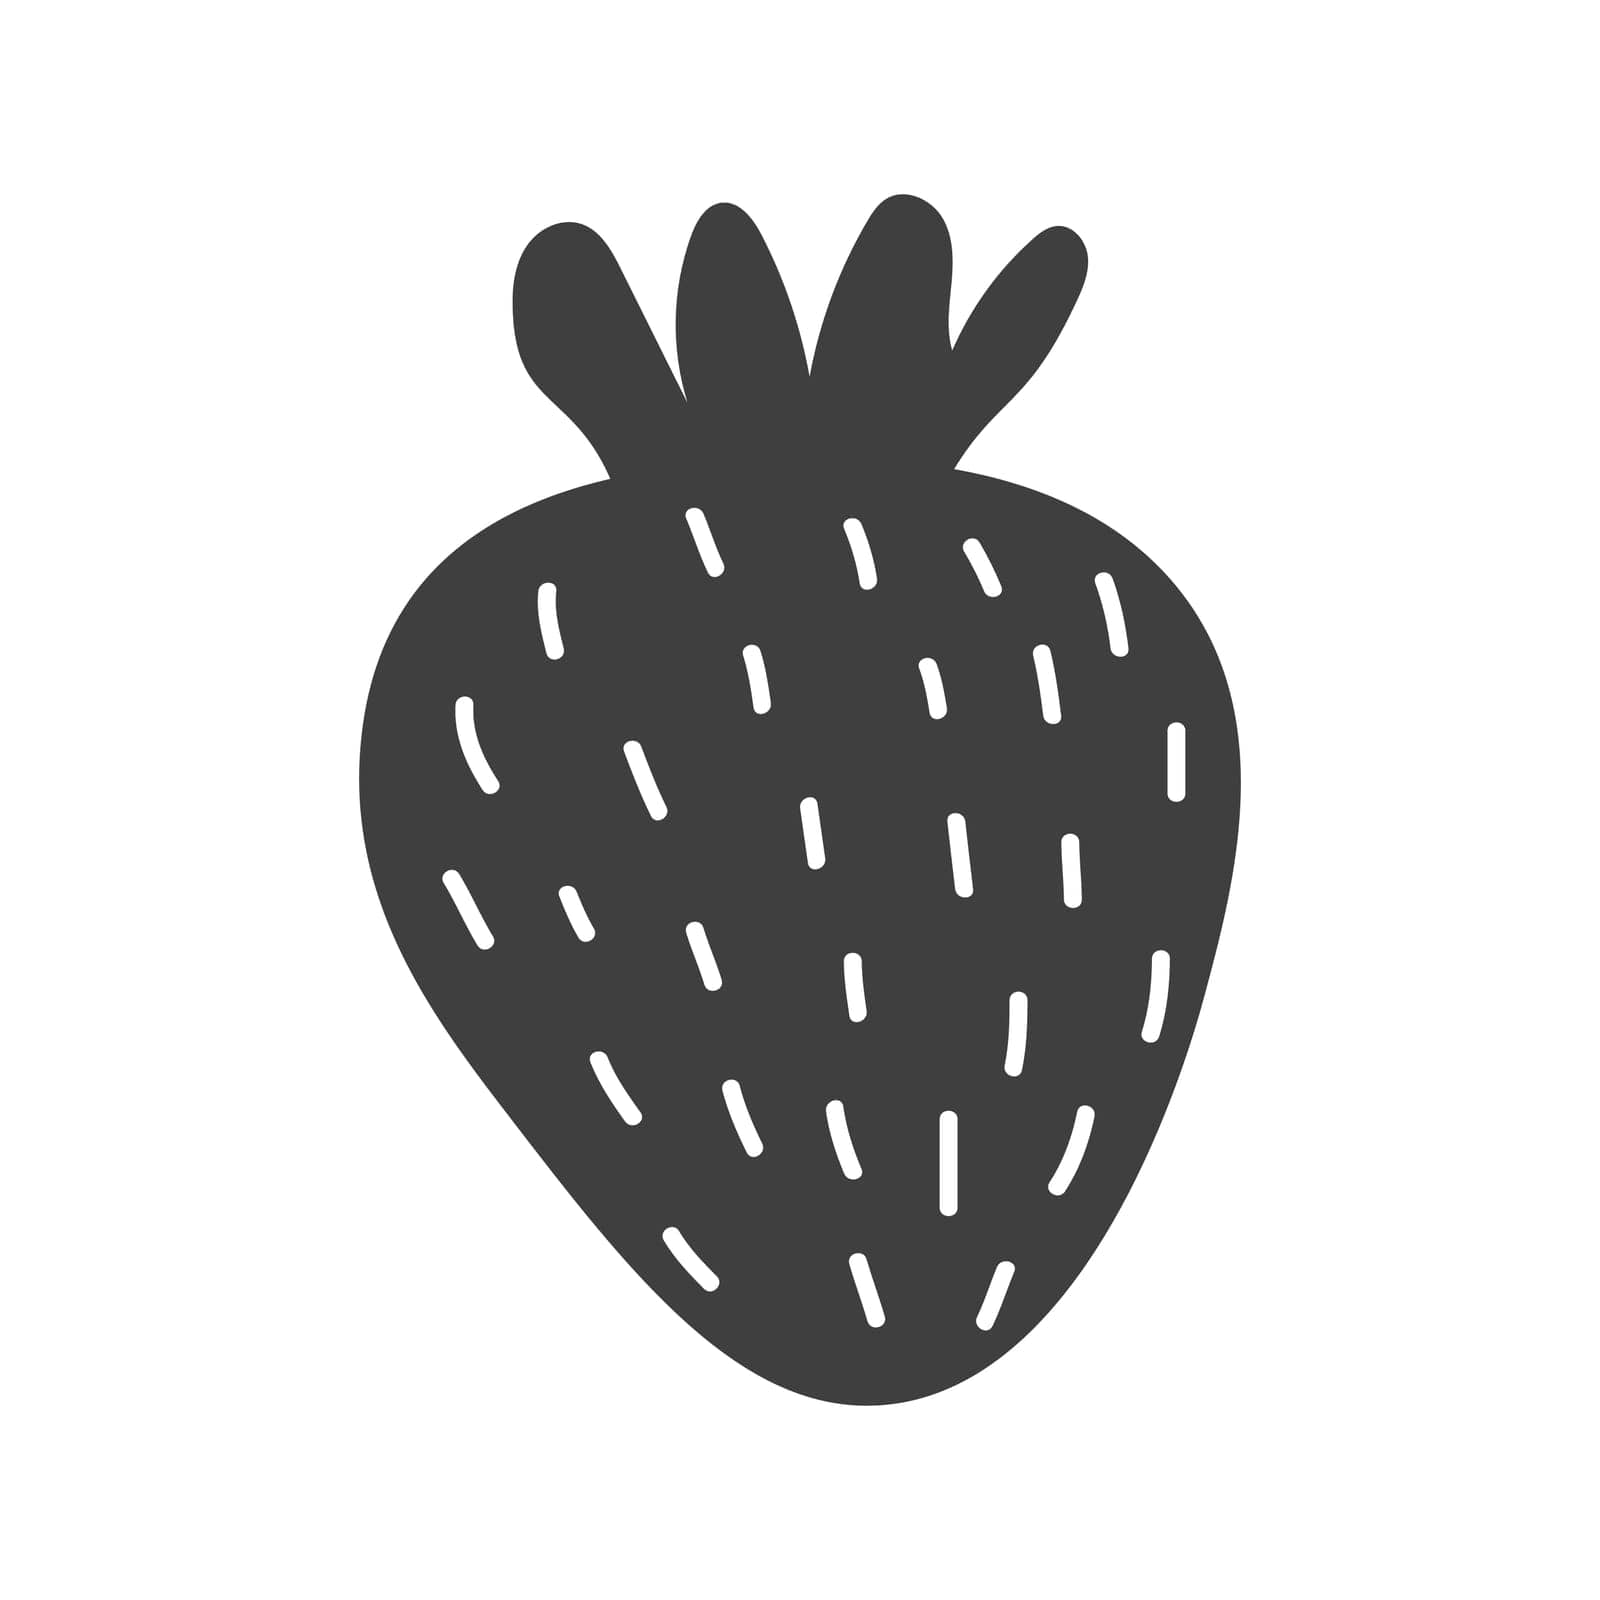 strawberries icon. food ingredient vector image. natural organic fruit and vegetarian food design element